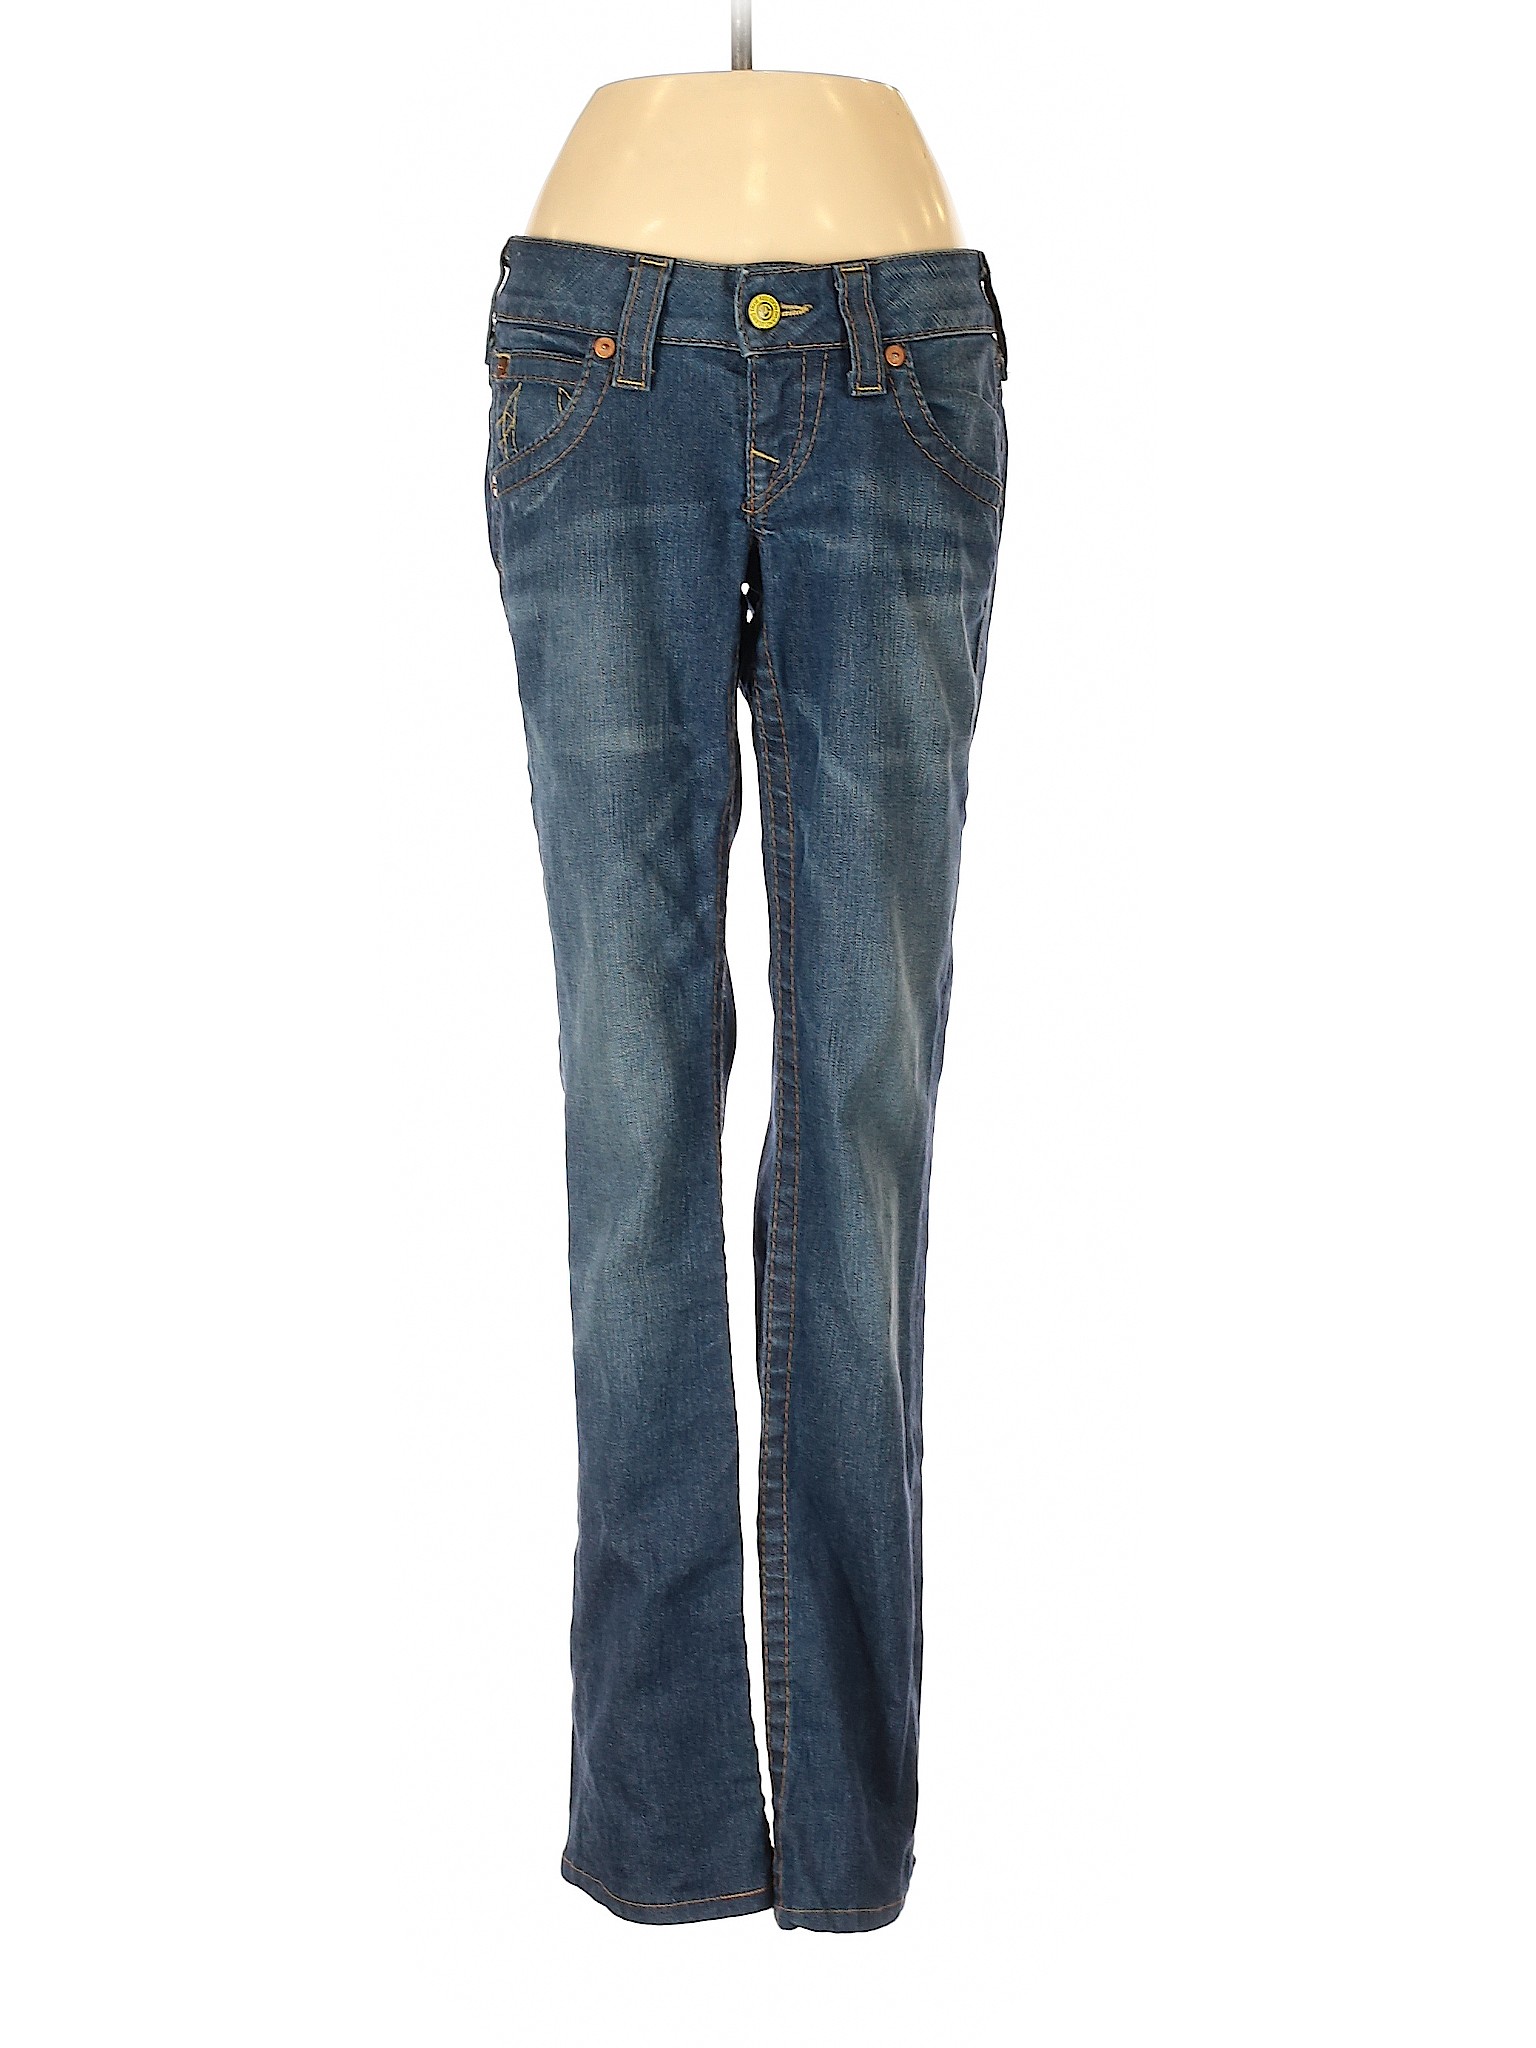 True Religion Outlet Solid Blue Jeans 26 Waist - 82% off | thredUP